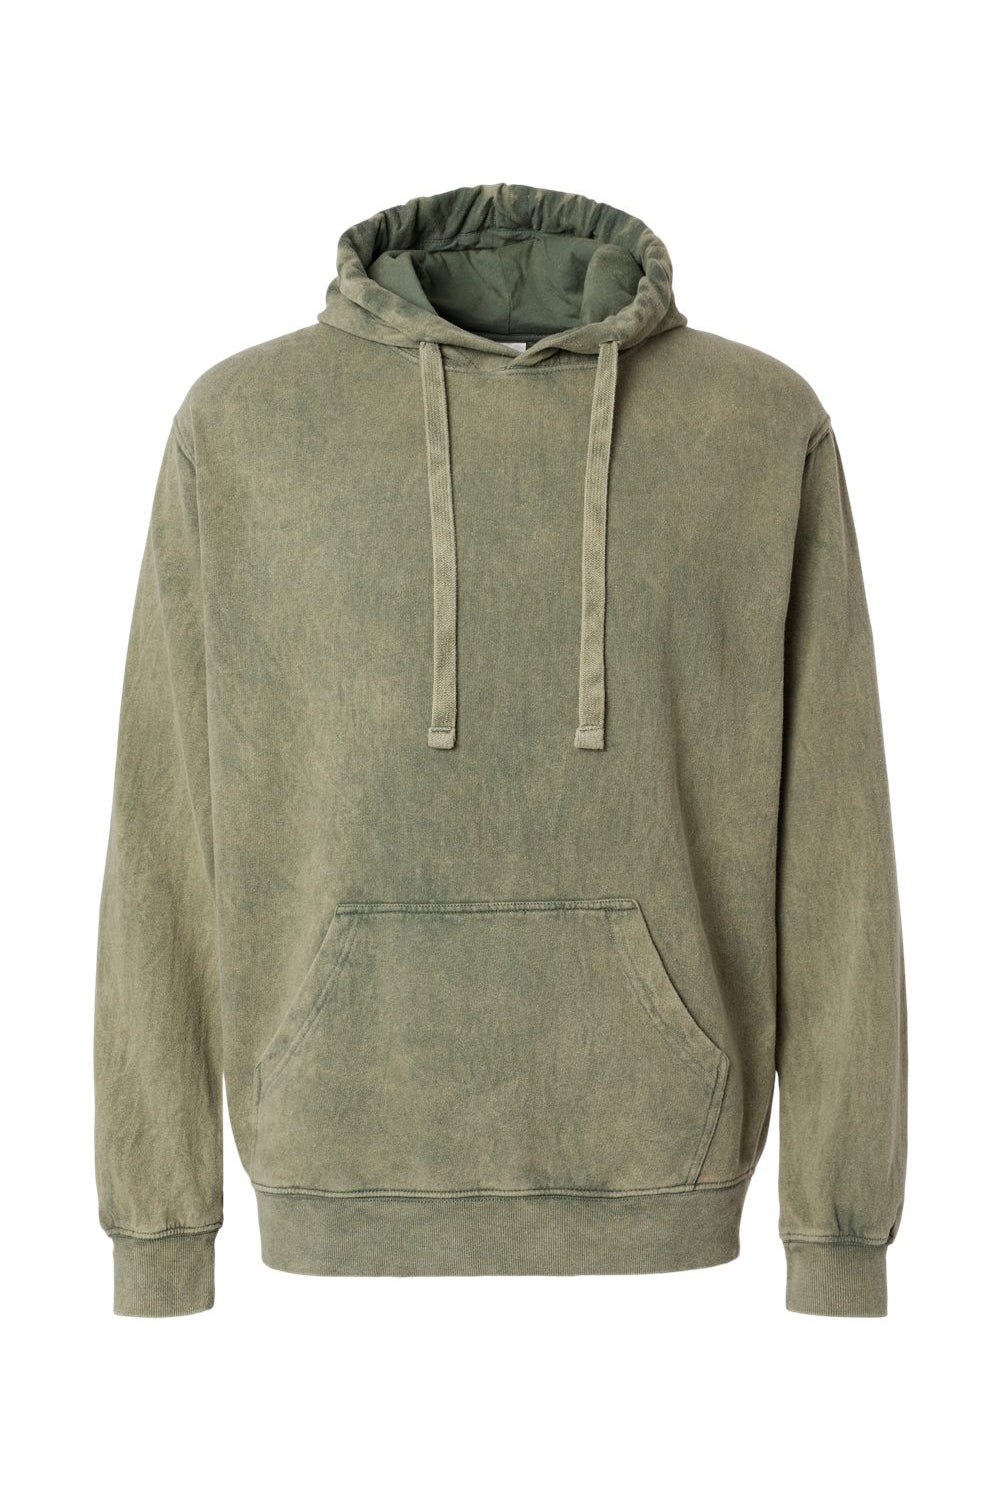 Dyenomite 854MW Mens Premium Fleece Mineral Wash Hooded Sweatshirt Hoodie Kale Green Flat Front